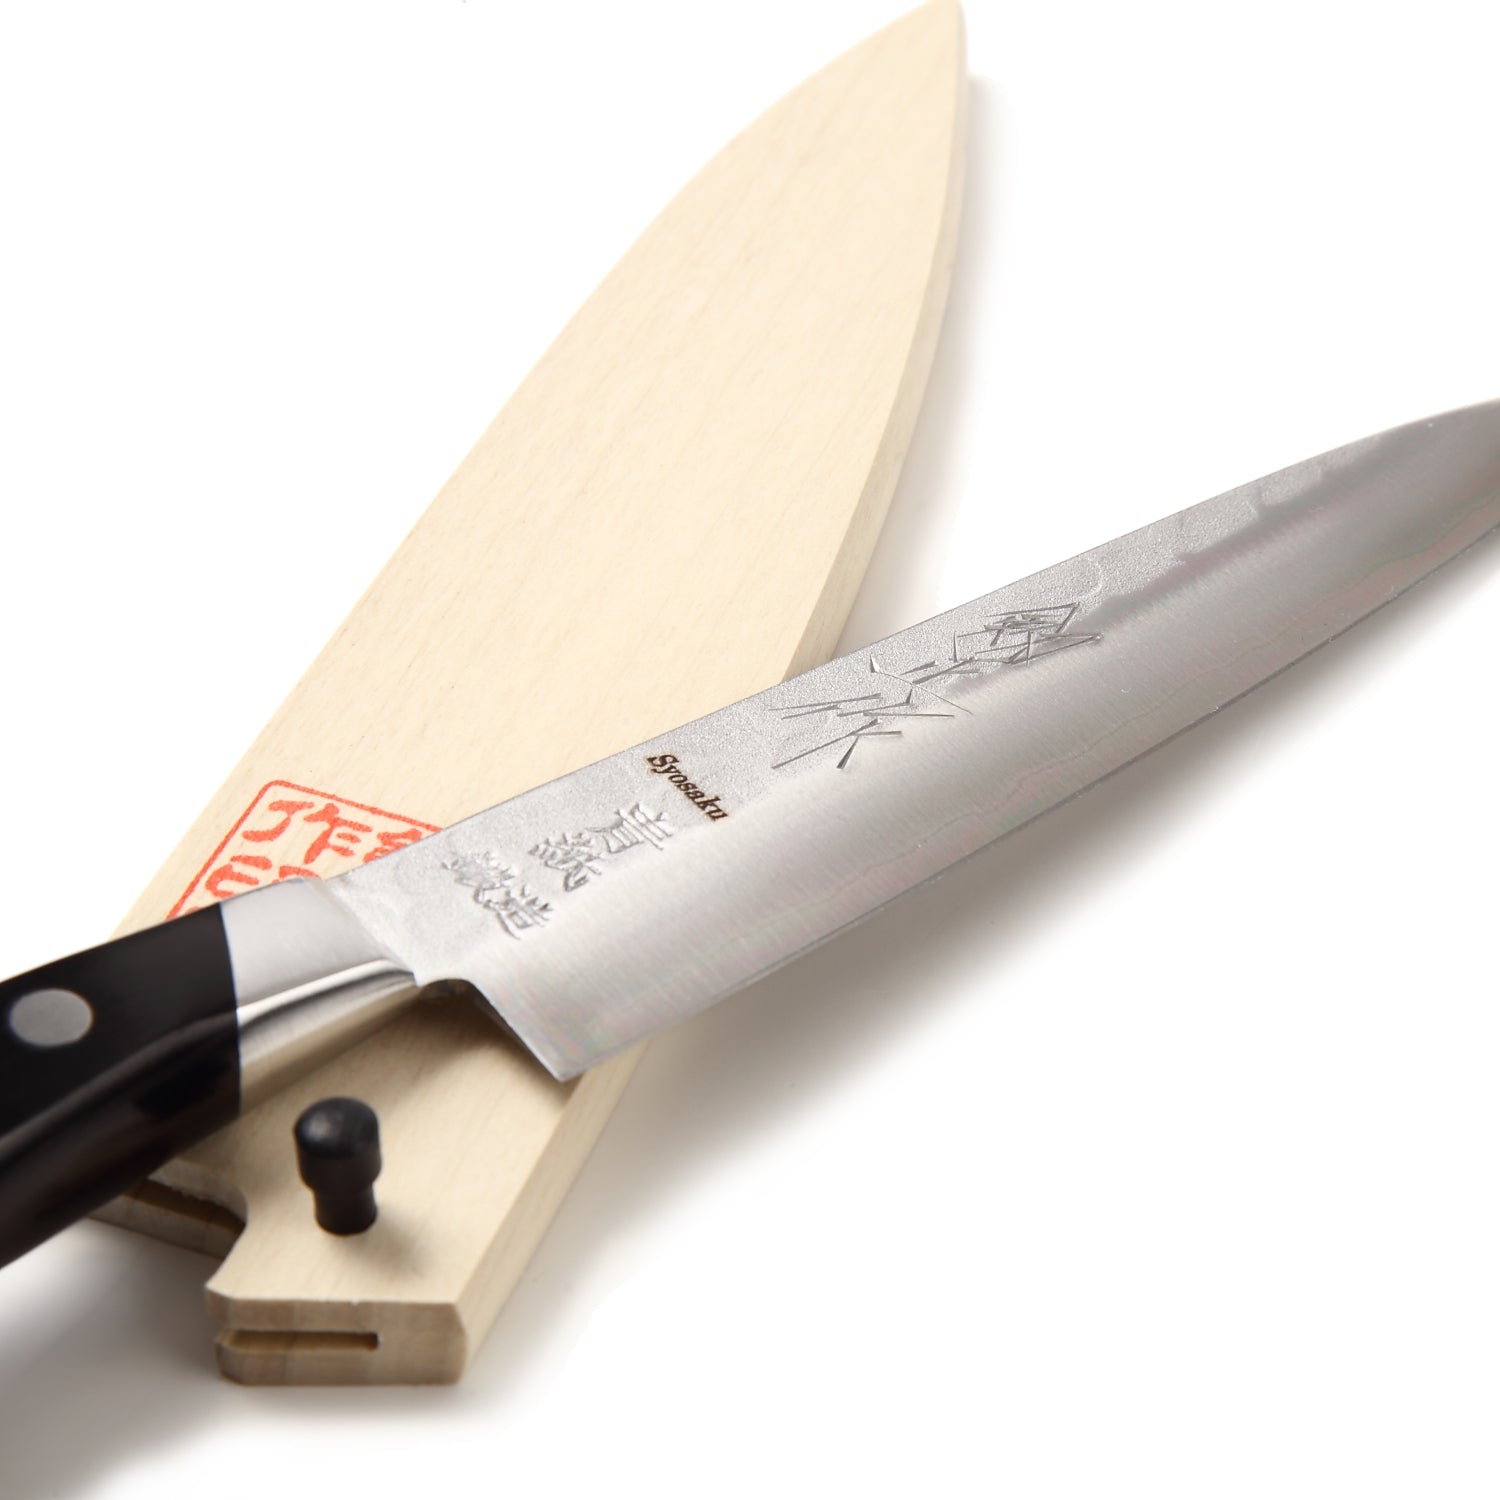 Syosaku Japanese Petty Knife Aoko (Blue Steel) No.2 Black Pakkawood Handle, 5.3-inch (135mm) with Magnolia Wood Sheath Saya Cover